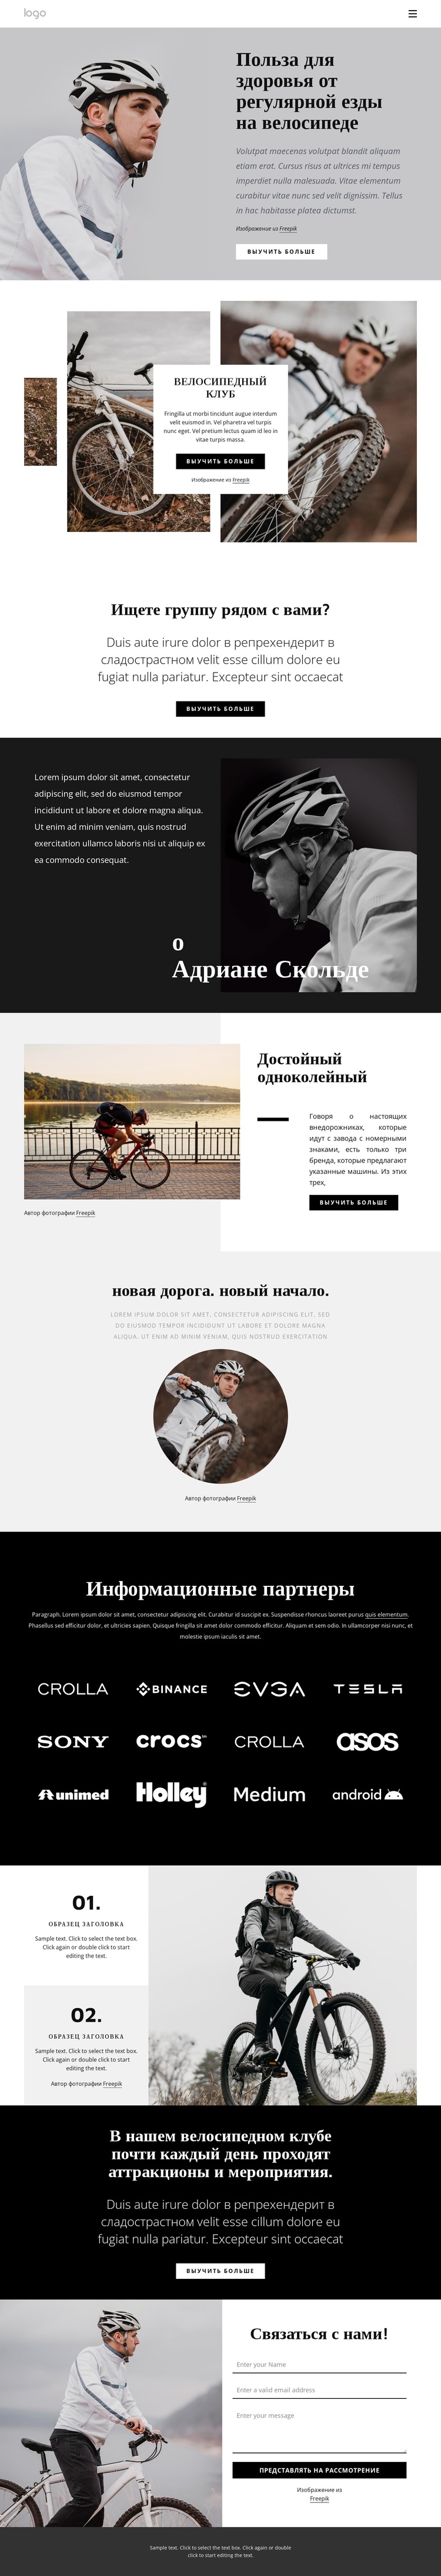 Преимущества регулярной езды на велосипеде WordPress тема